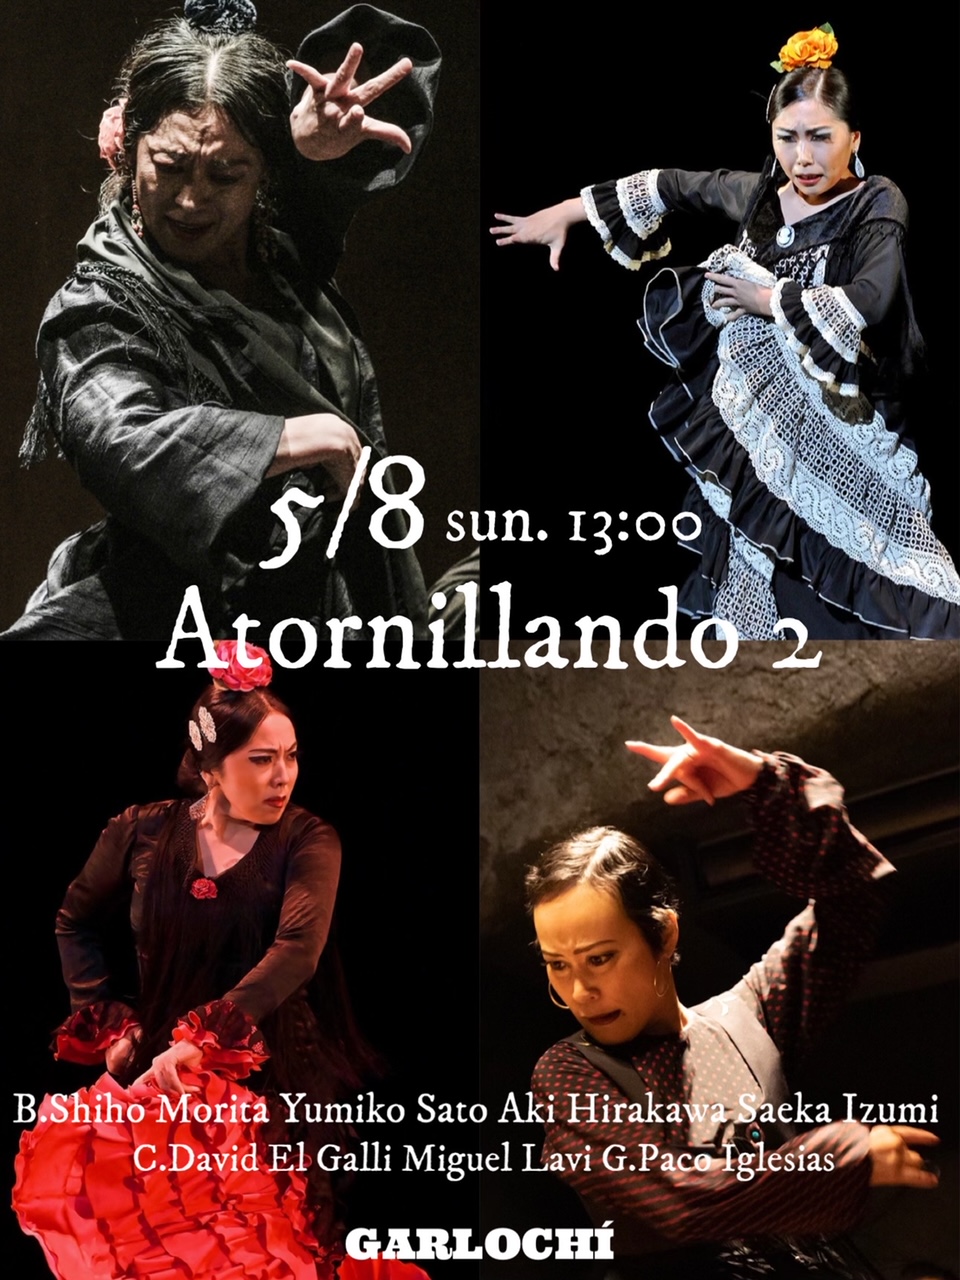 Special Flamenco Live “Atornillando 2”